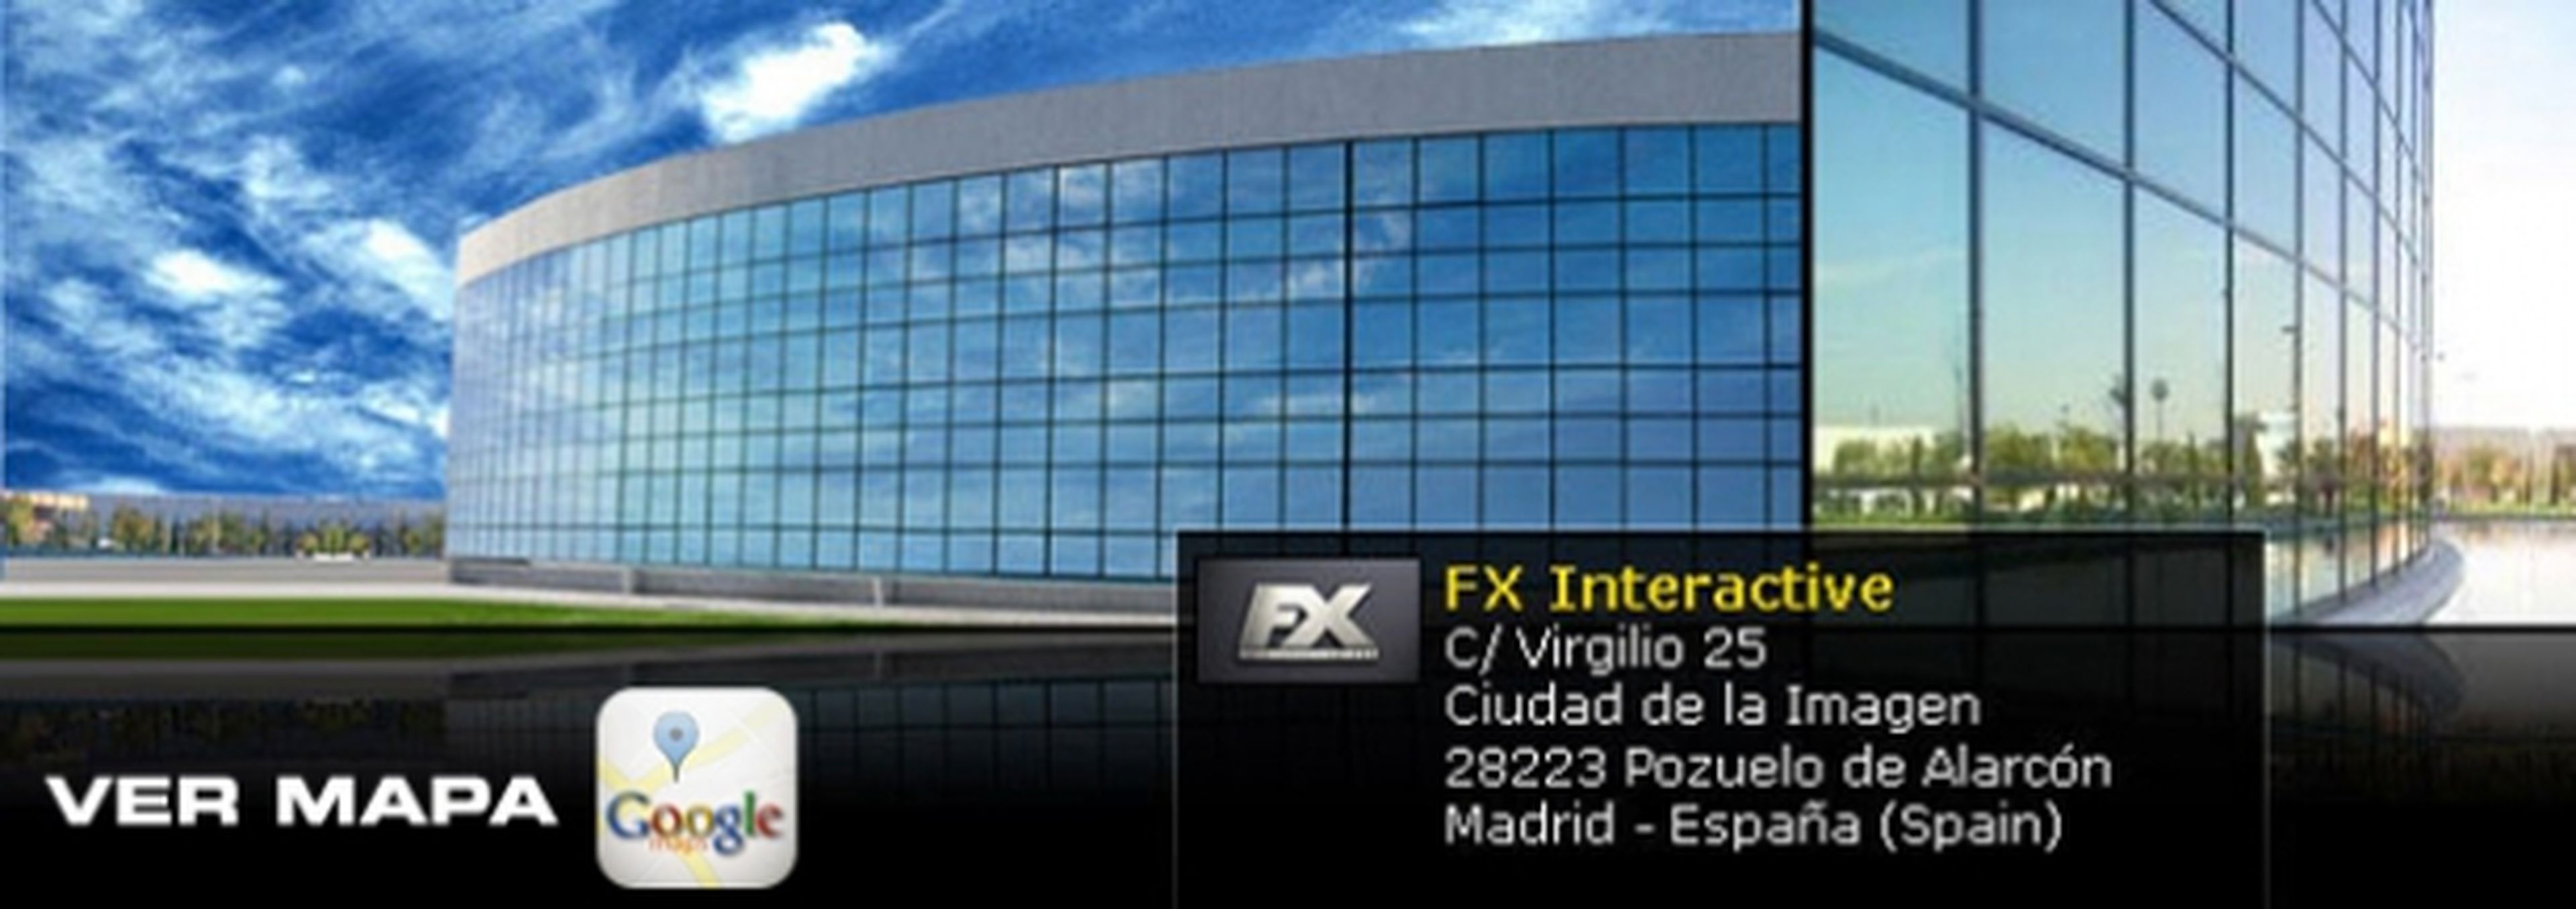 FX Interactive busca "Betatesters" para FX Fútbol 2015